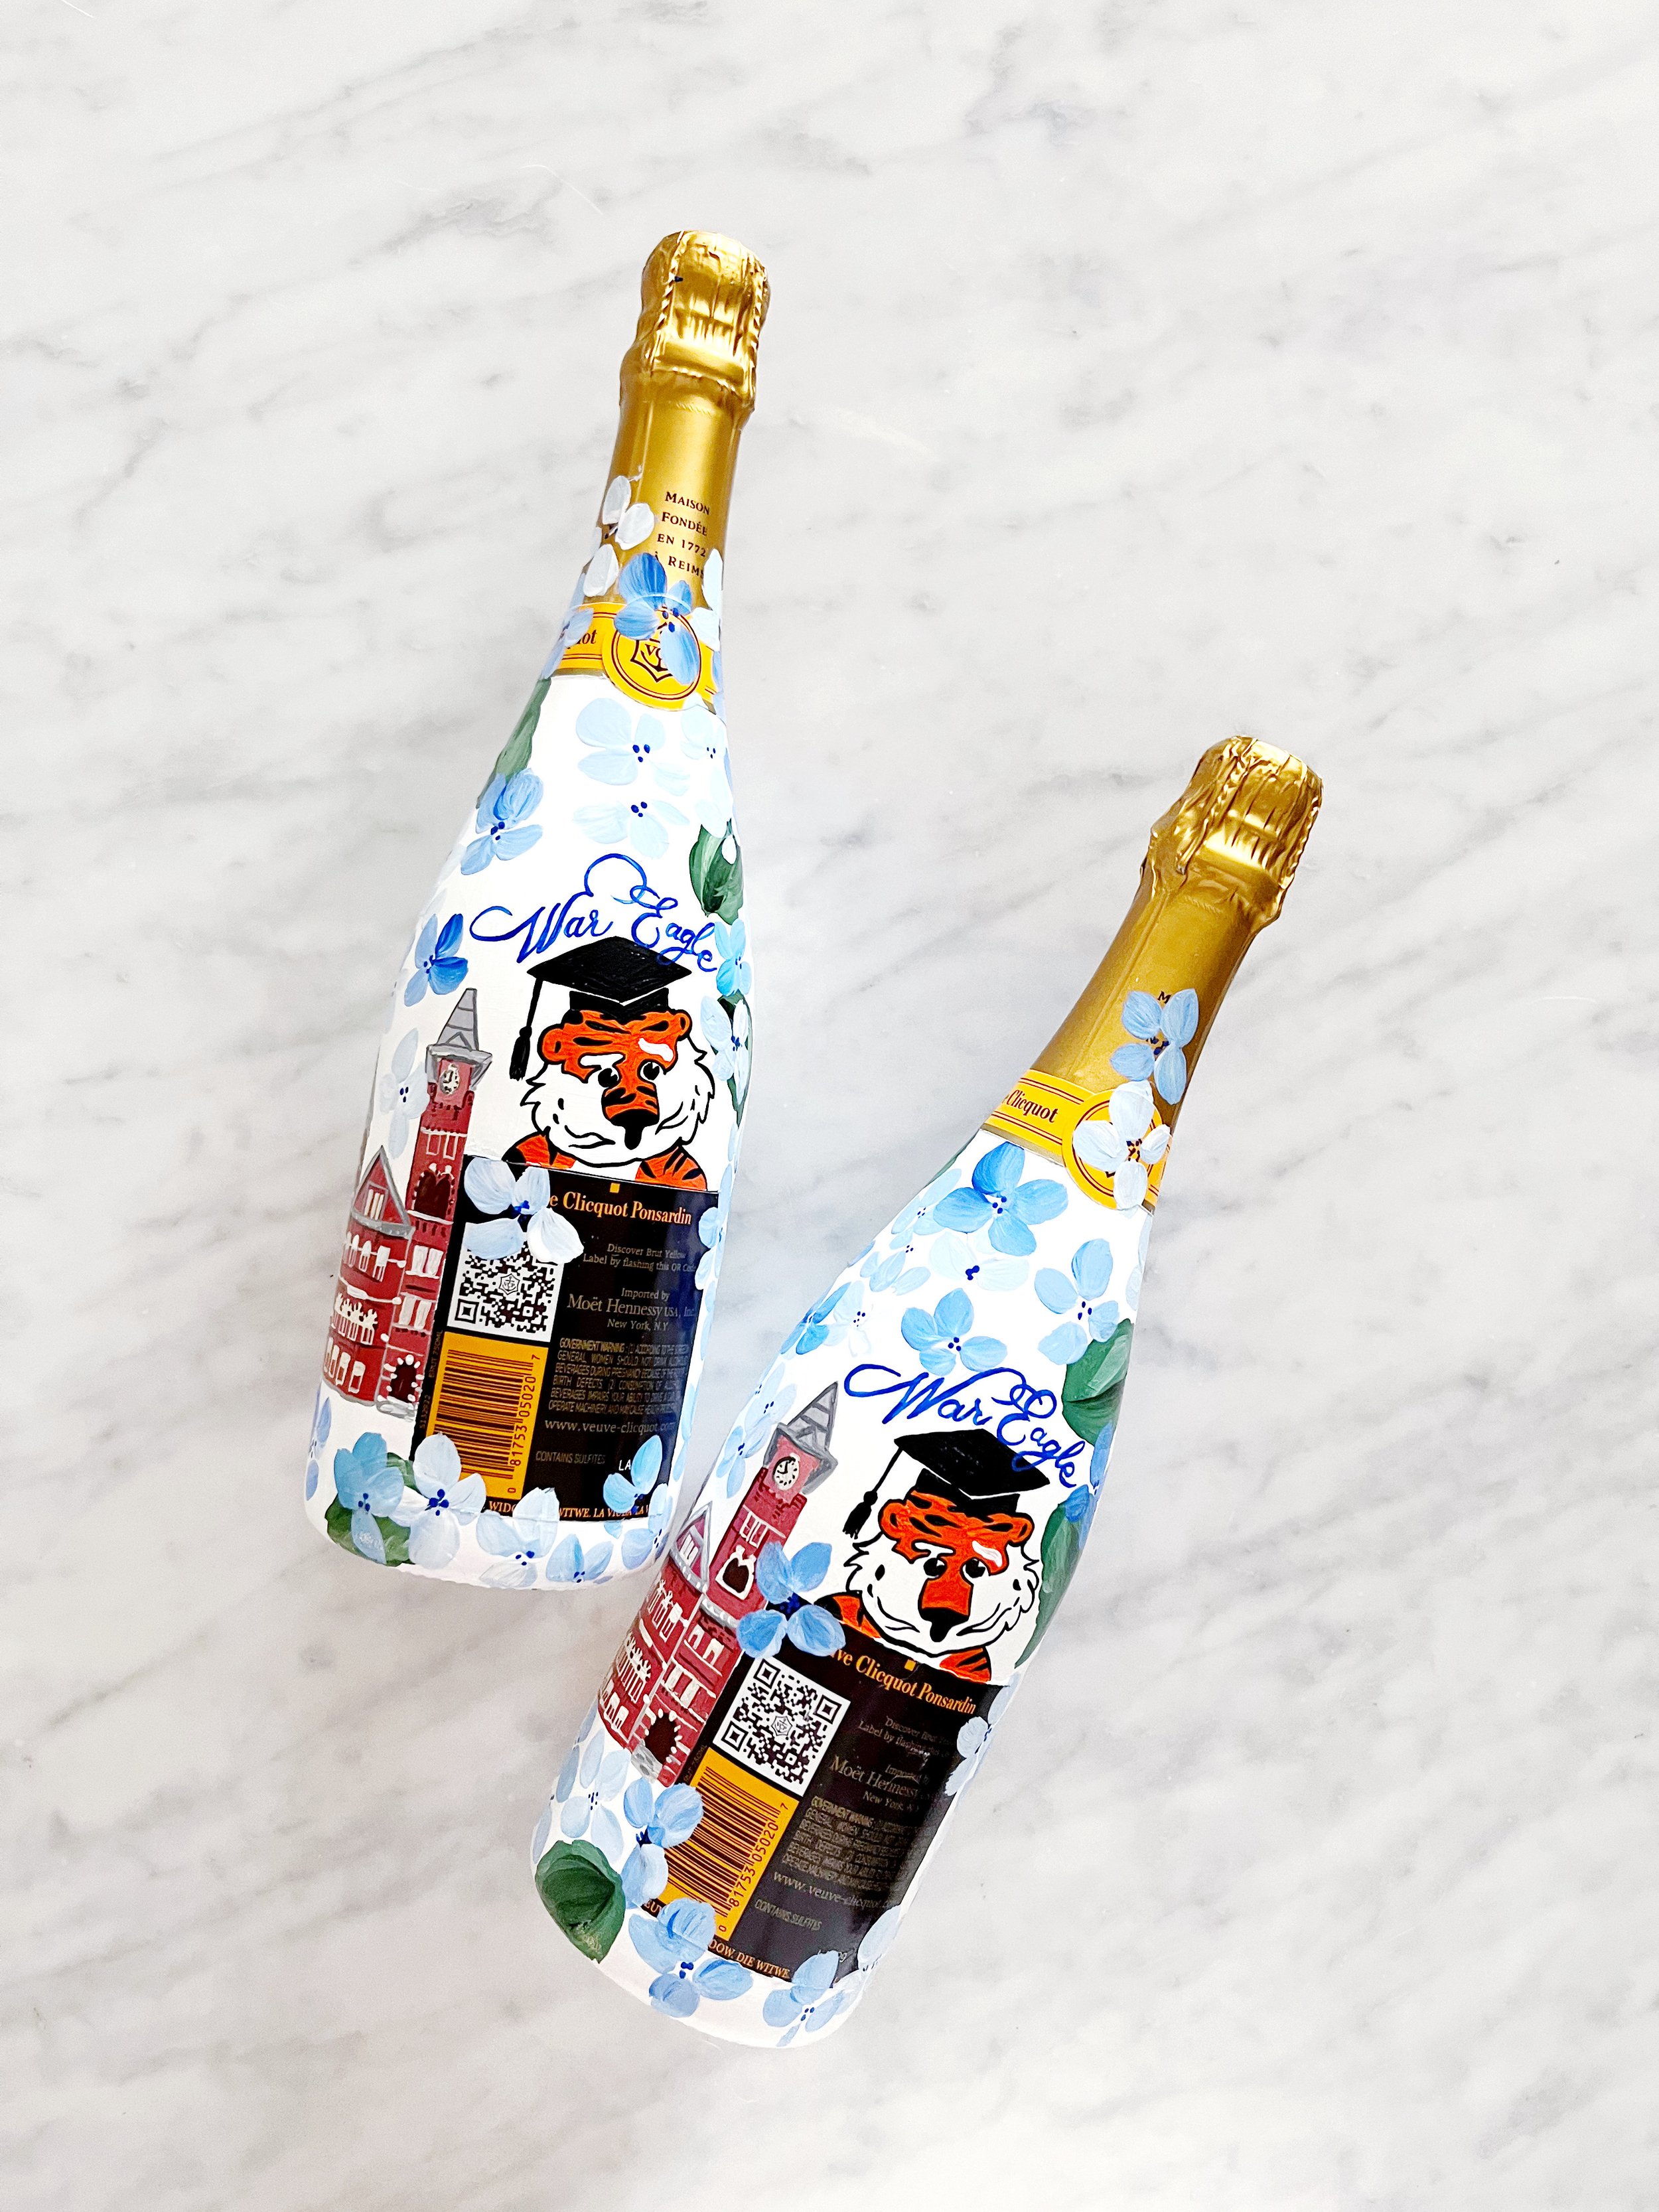 Veuve Champagne Bottle in Louis Vuitton Check Design handpainted